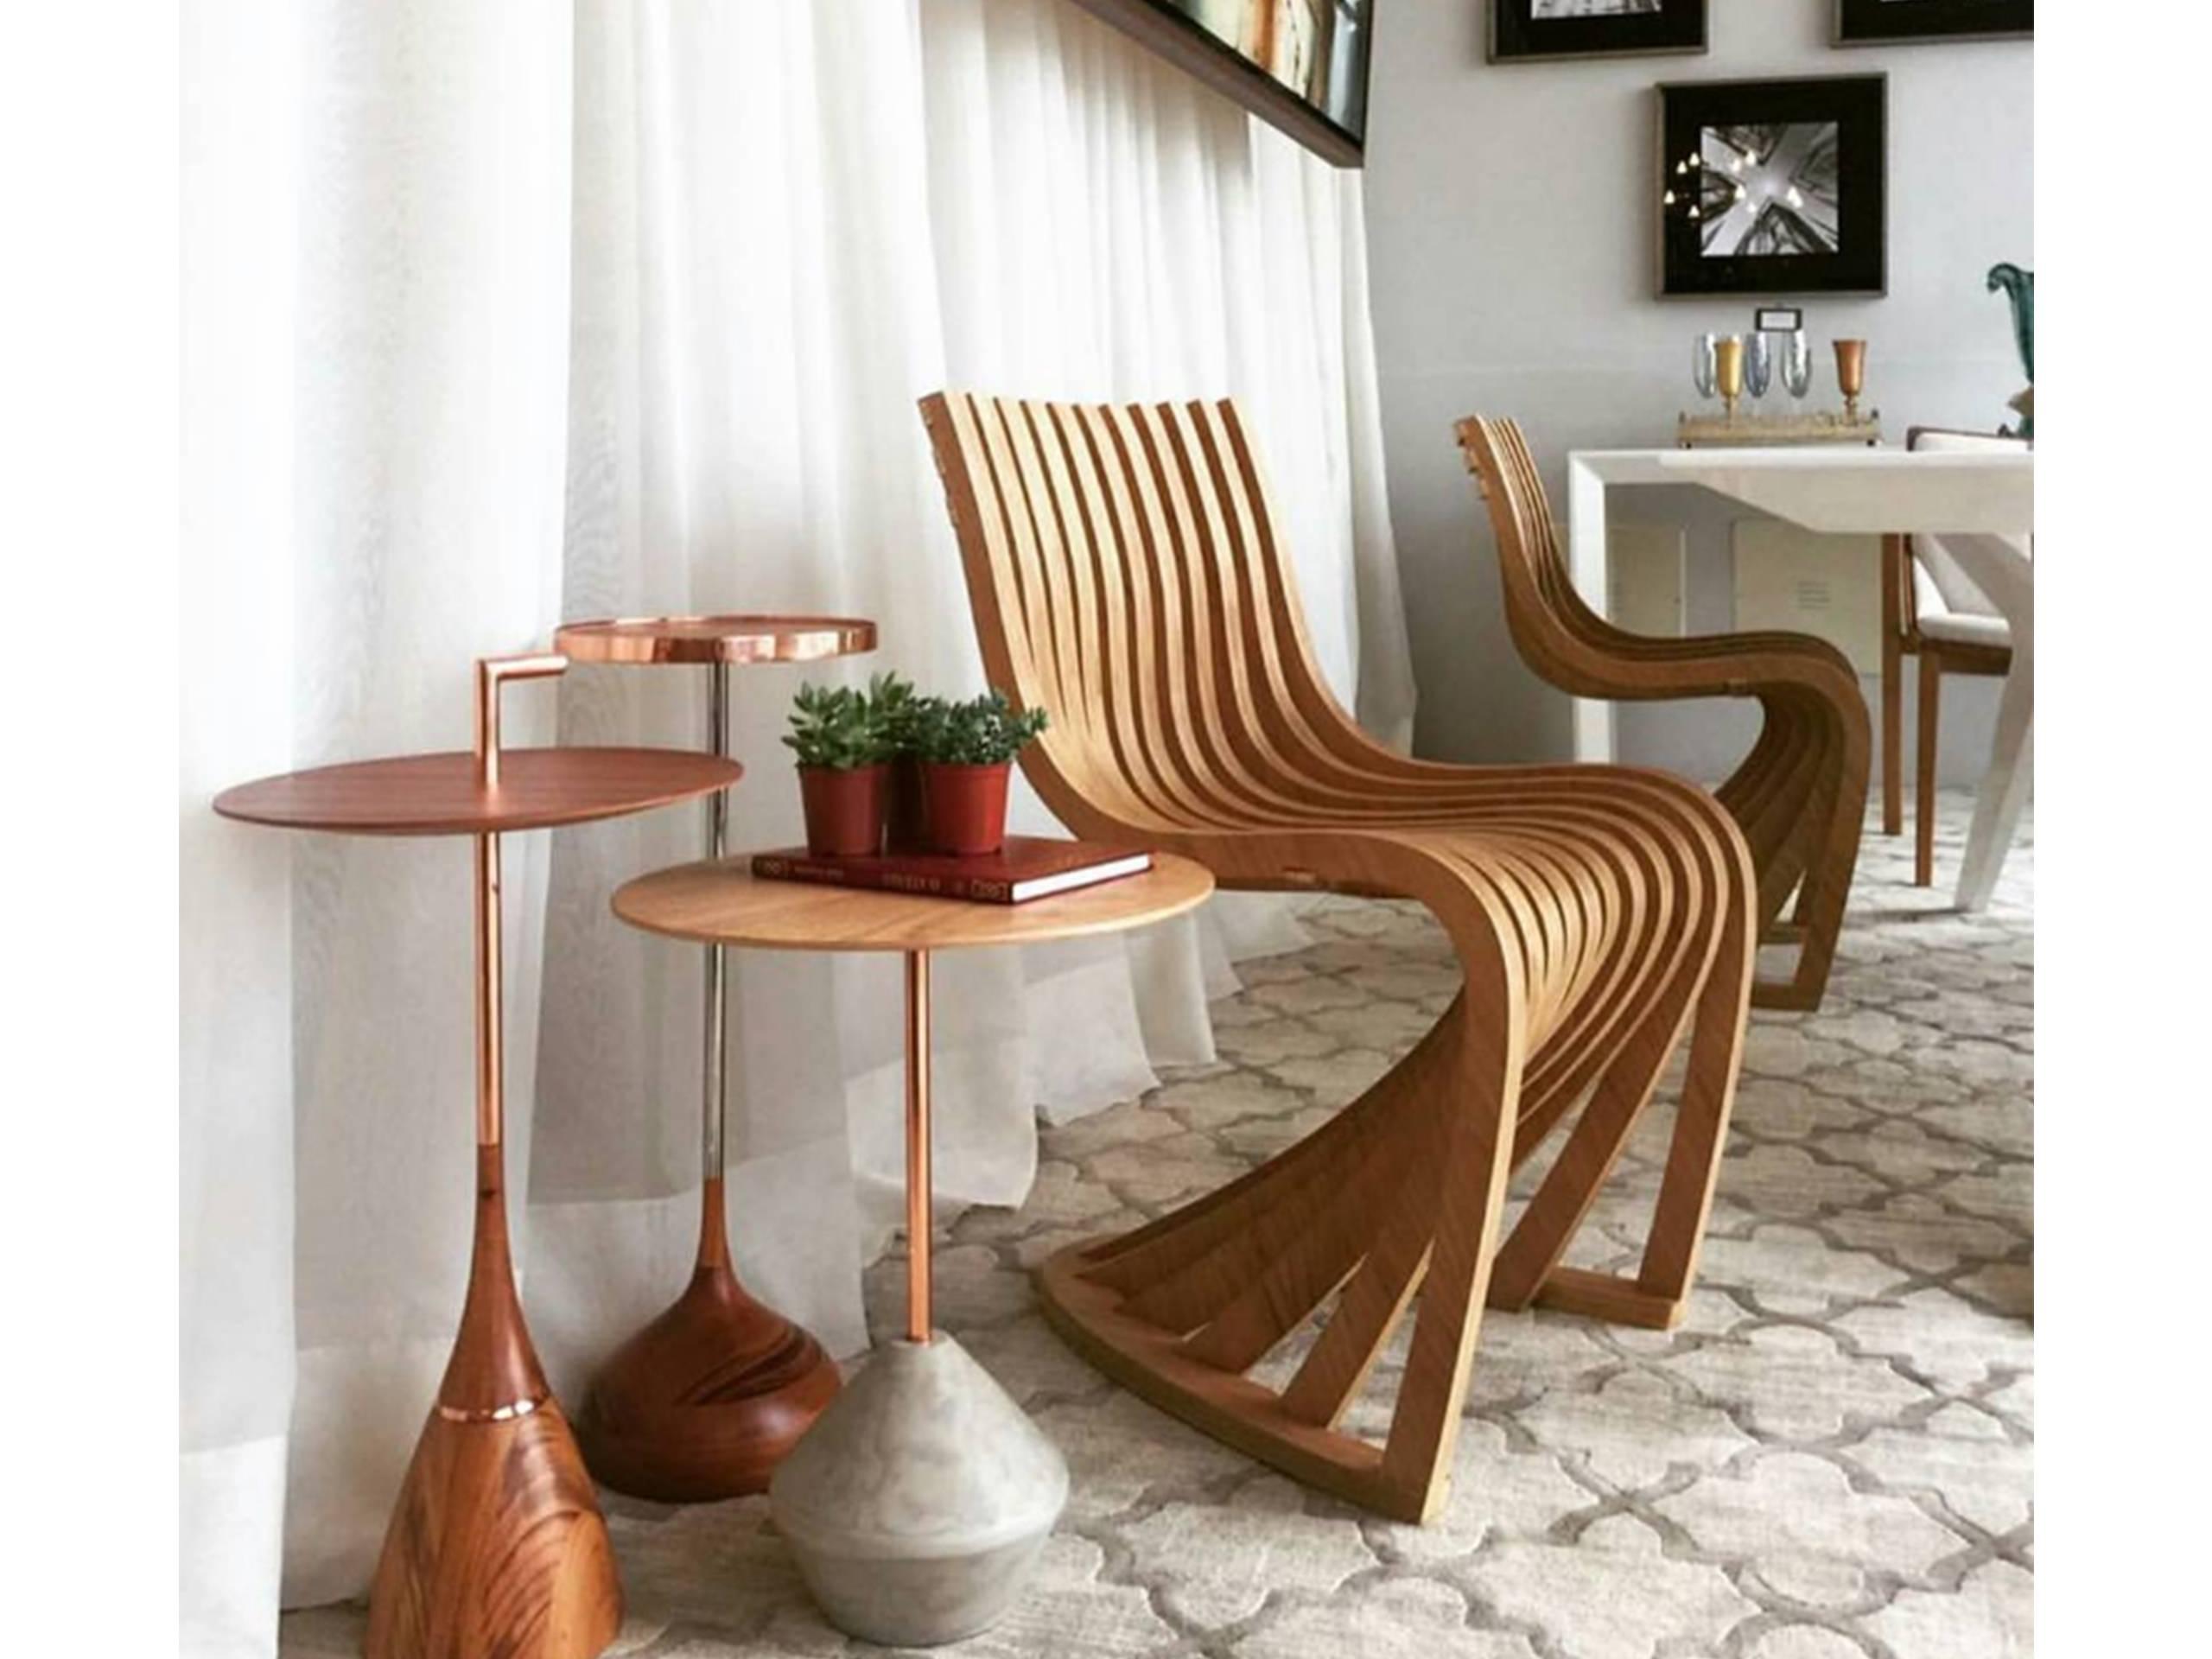 Pantosh Brazilian Contemporary Wood Chair by Lattoog 2